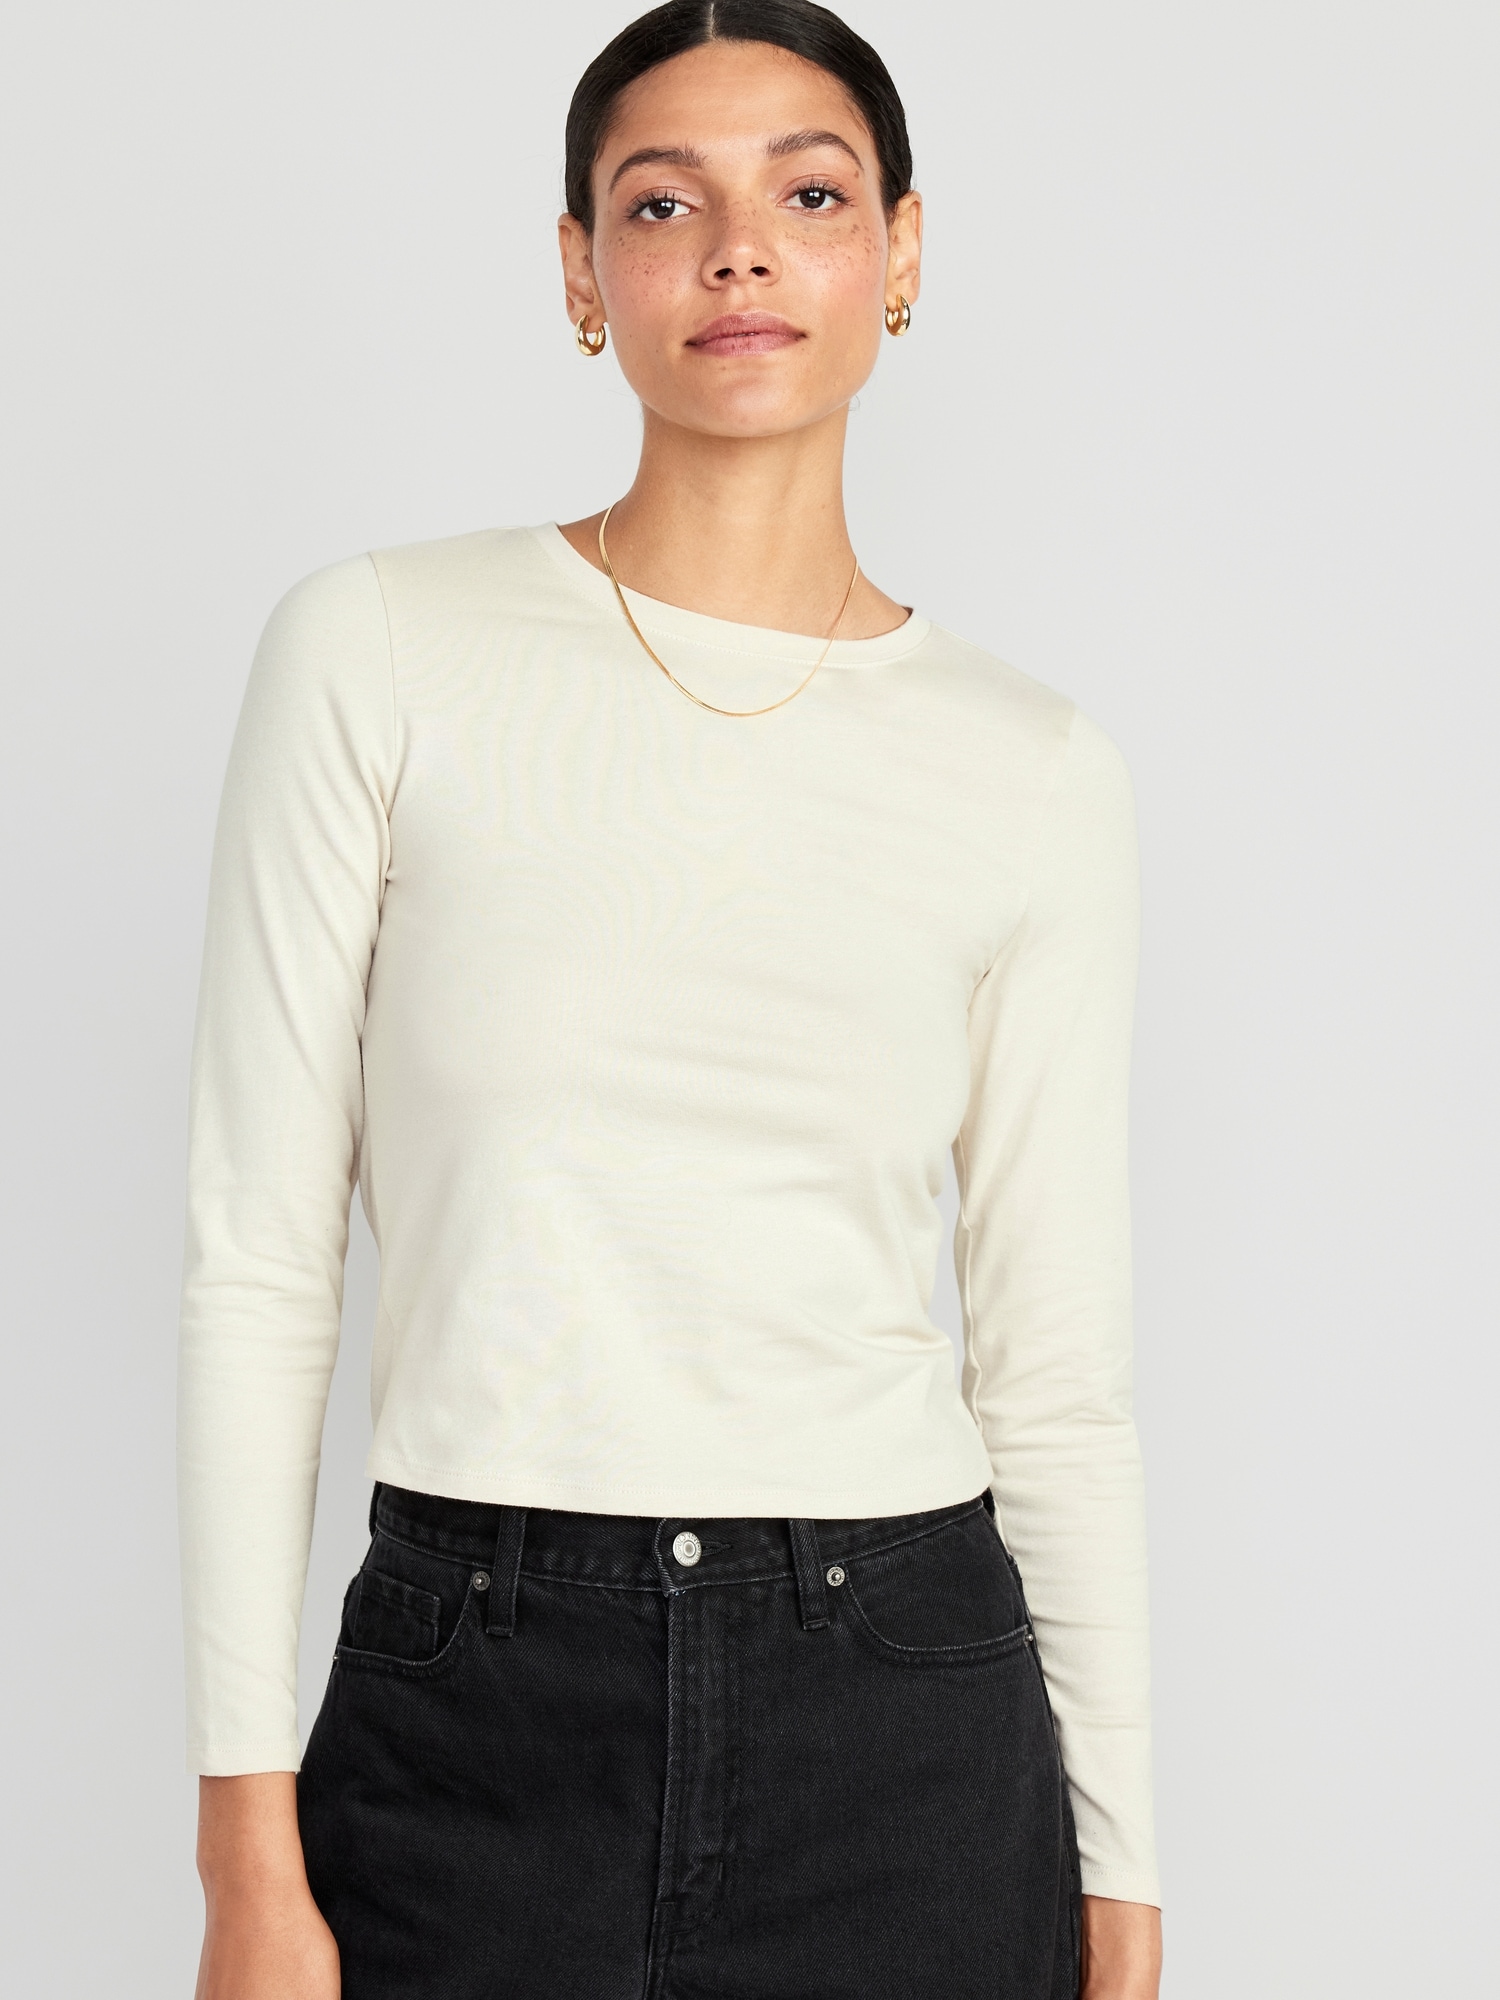 Black Long Sleeve Mid-Thigh T-Shirt, Off White Long Sleeve Tops